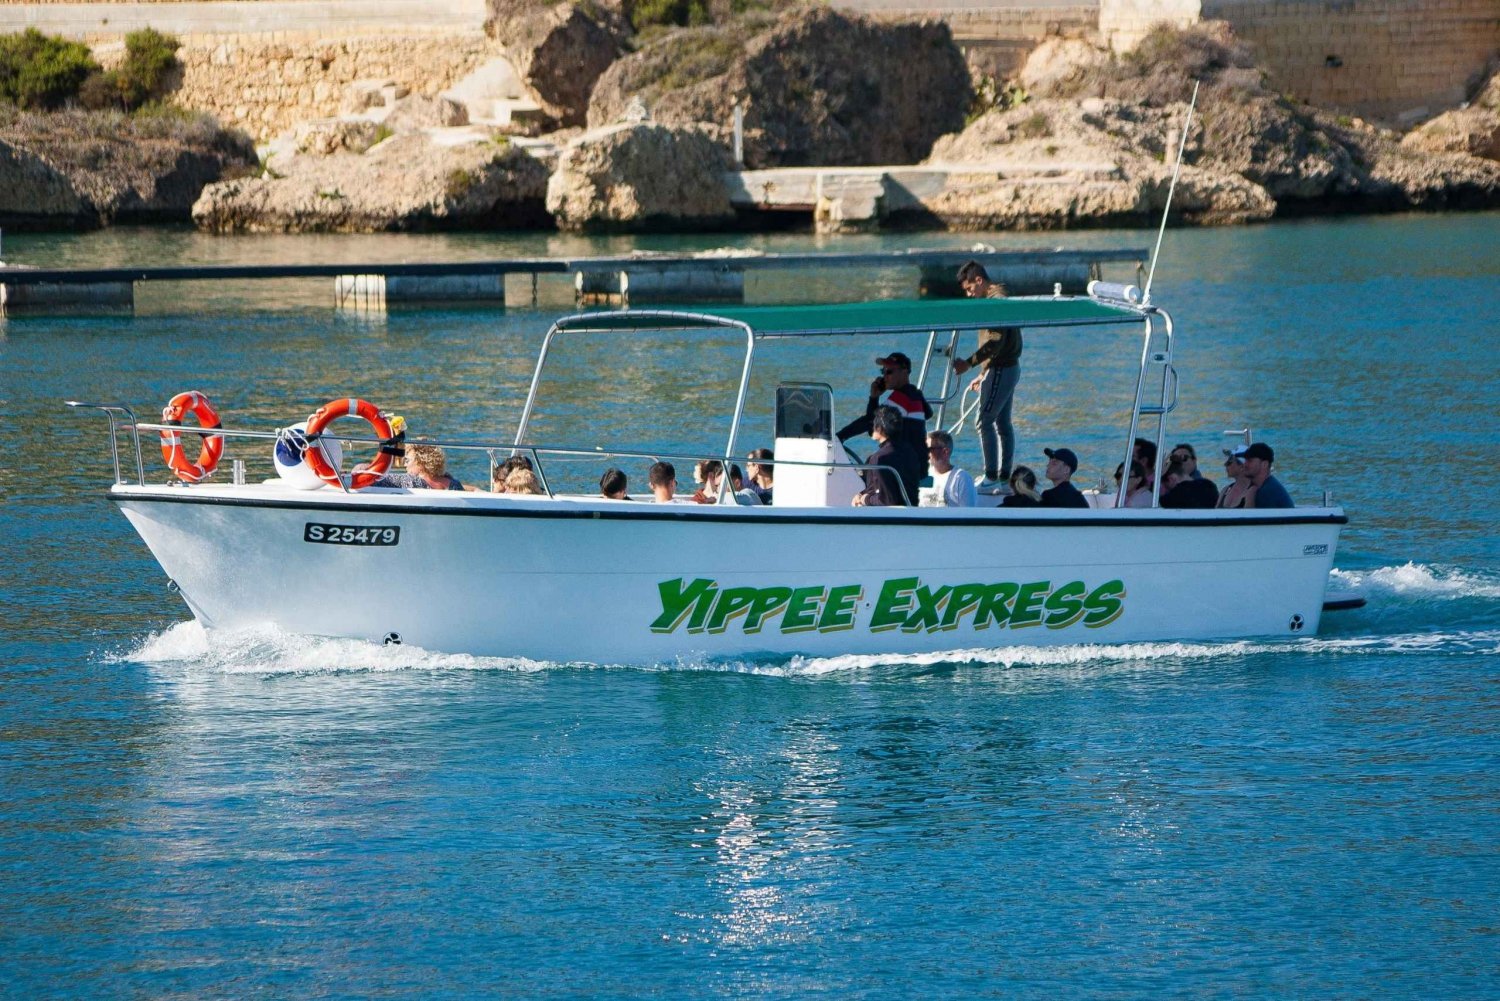 Location de bateau privé - Comino/Parties de Gozo